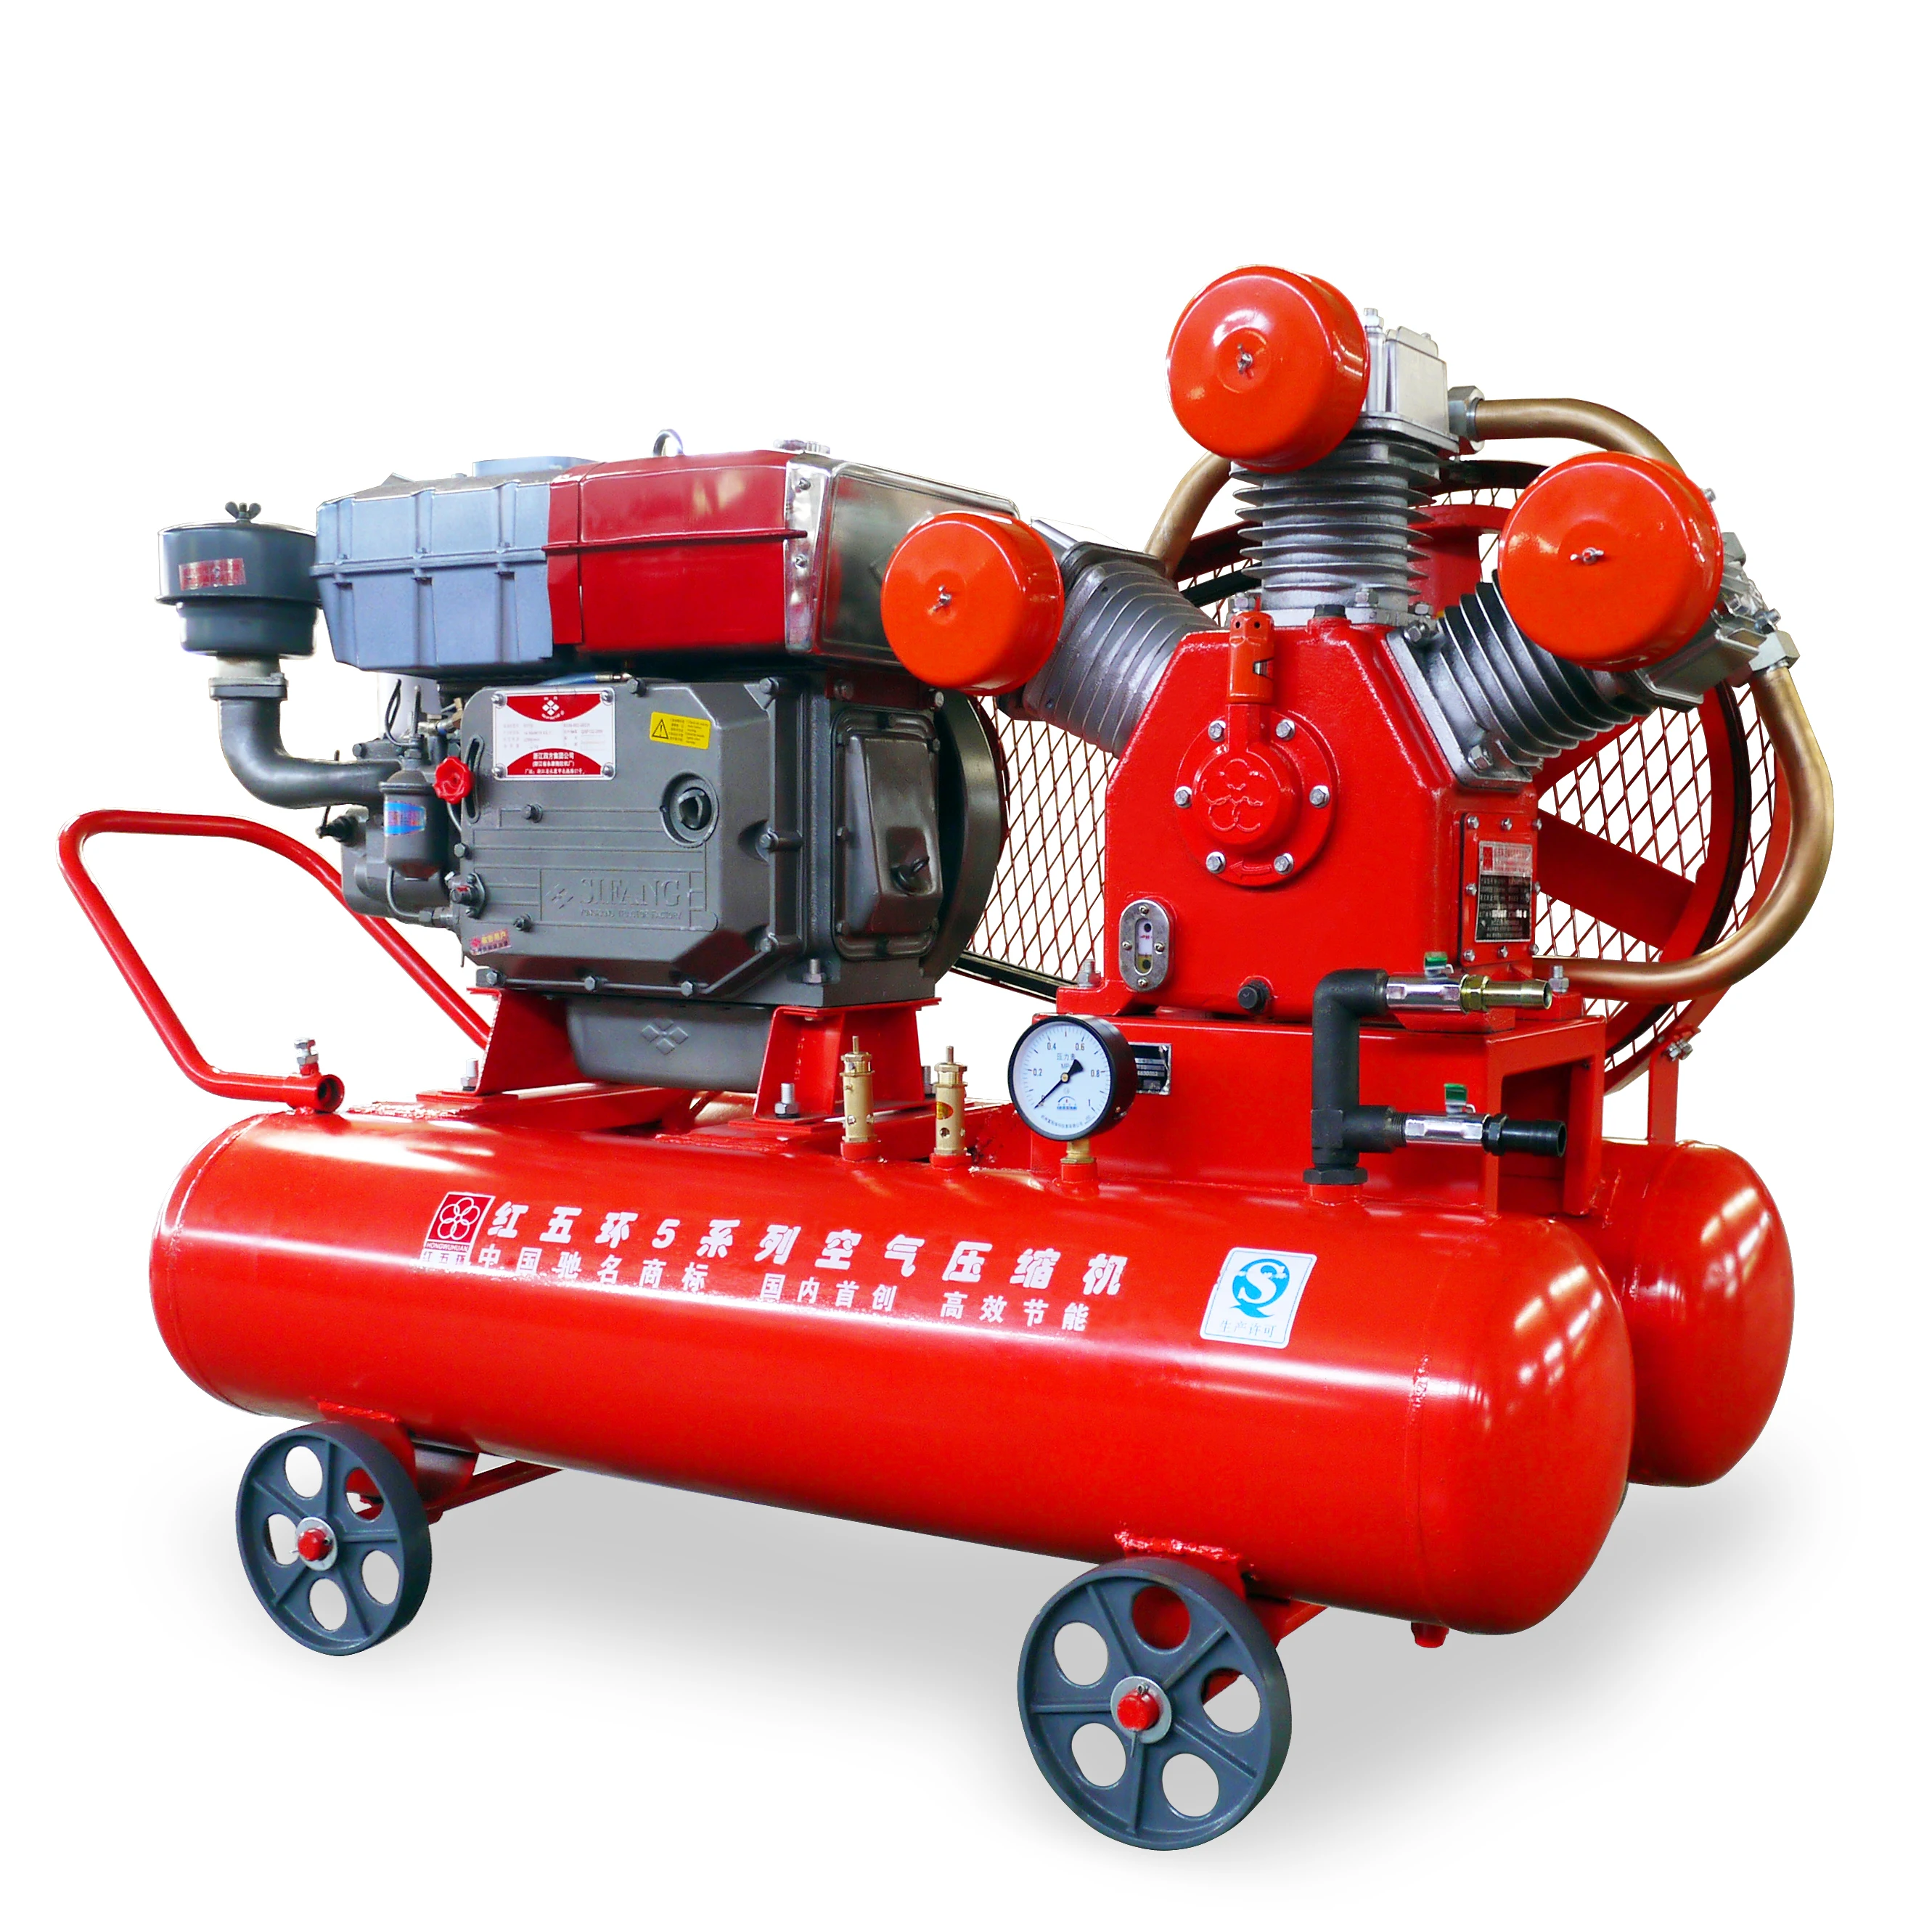 Hongwuhuan Mobile small diesel piston air compressor W2.85-5 5bar reciprocating air compressor for jack hammer